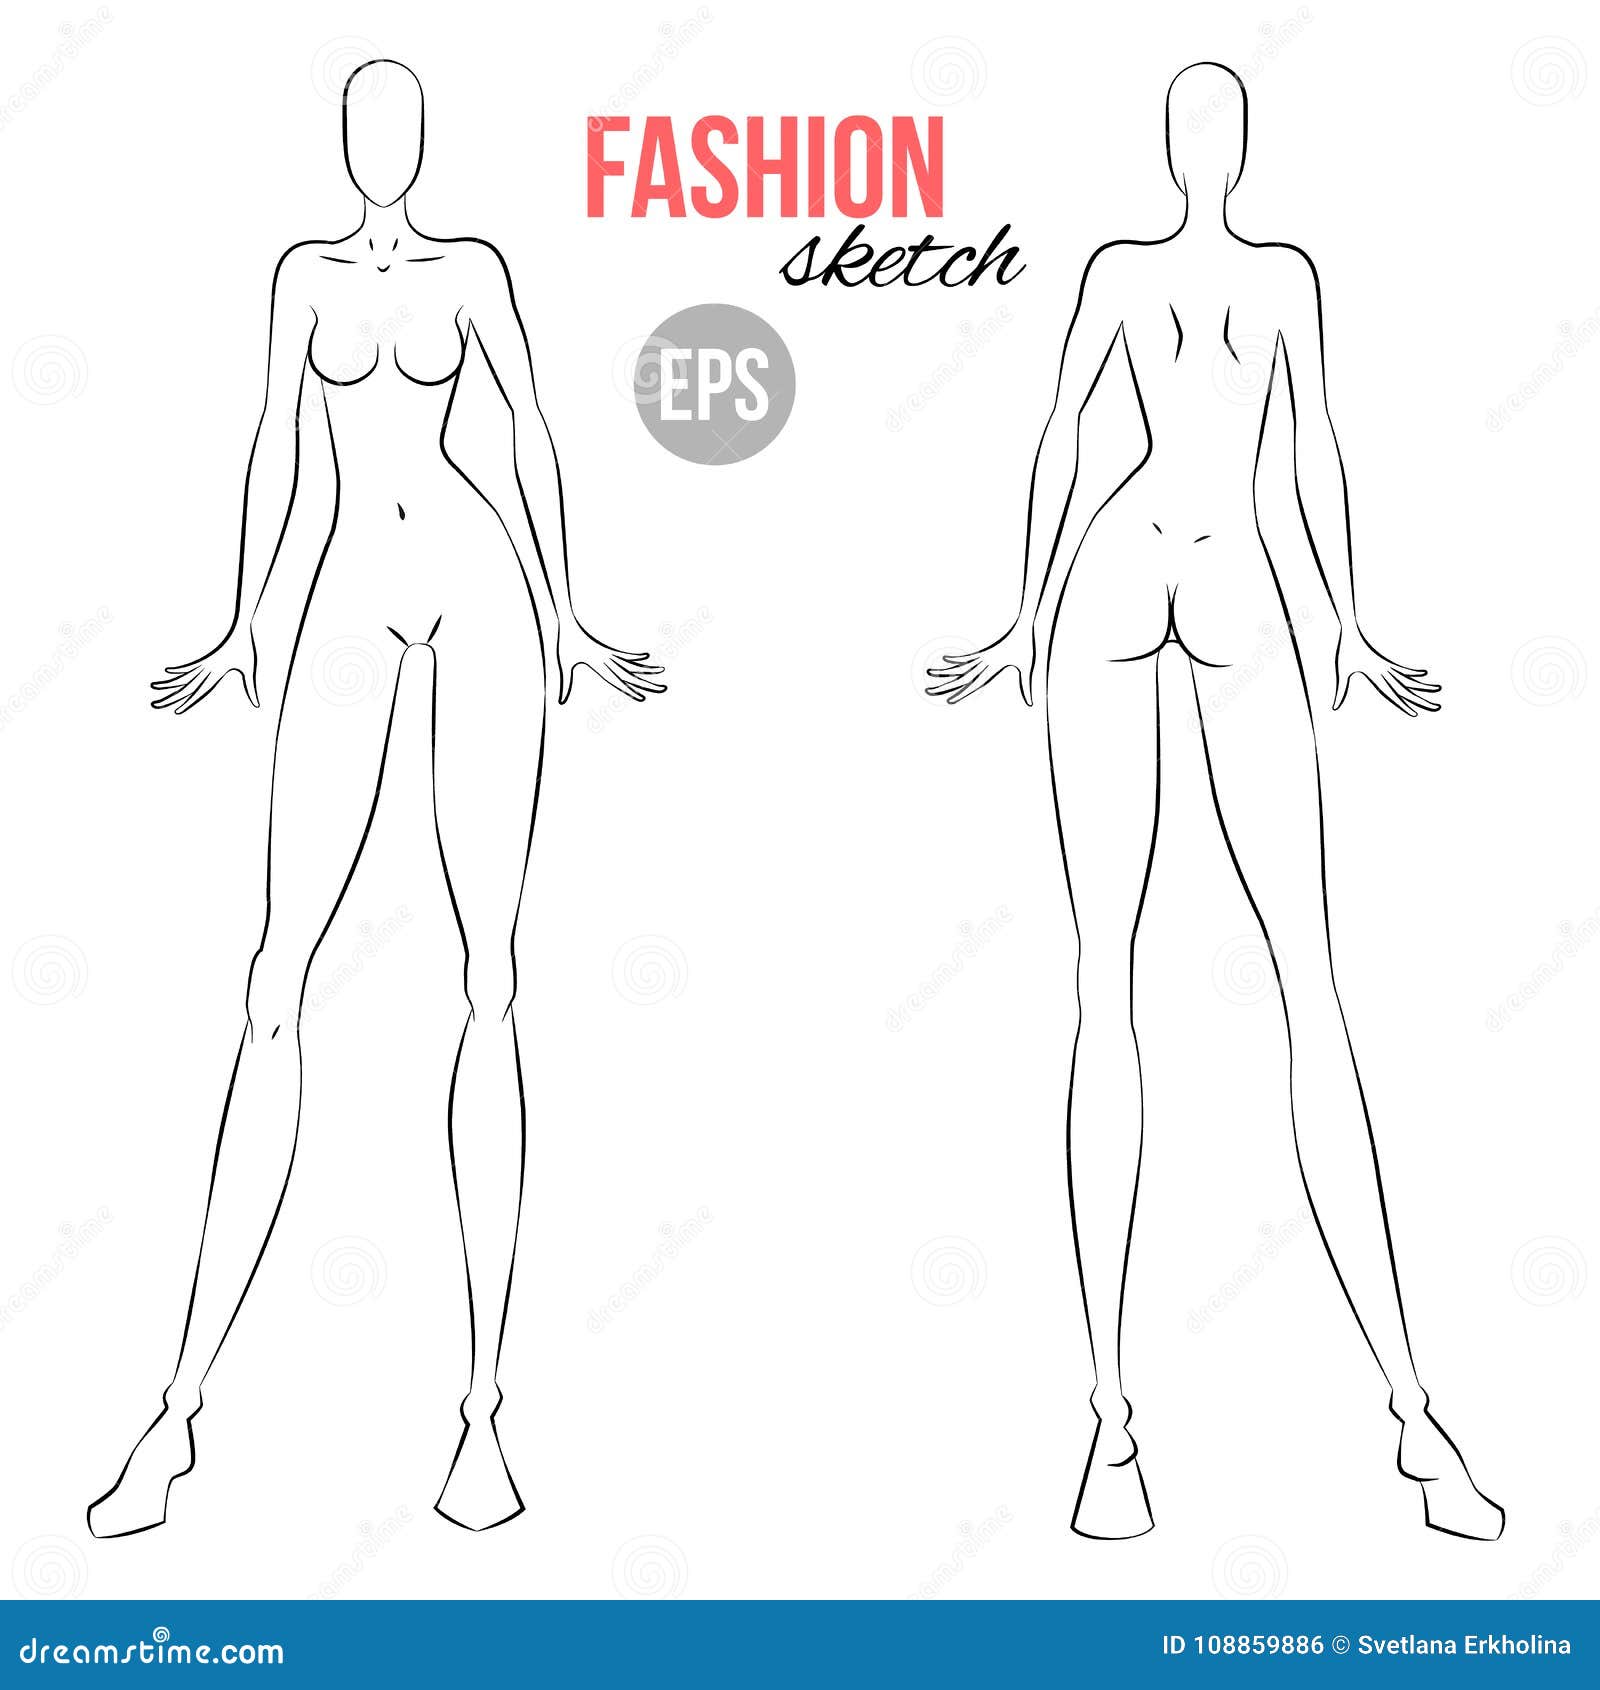 Model Fashion Sketch Images  Free Download on Freepik